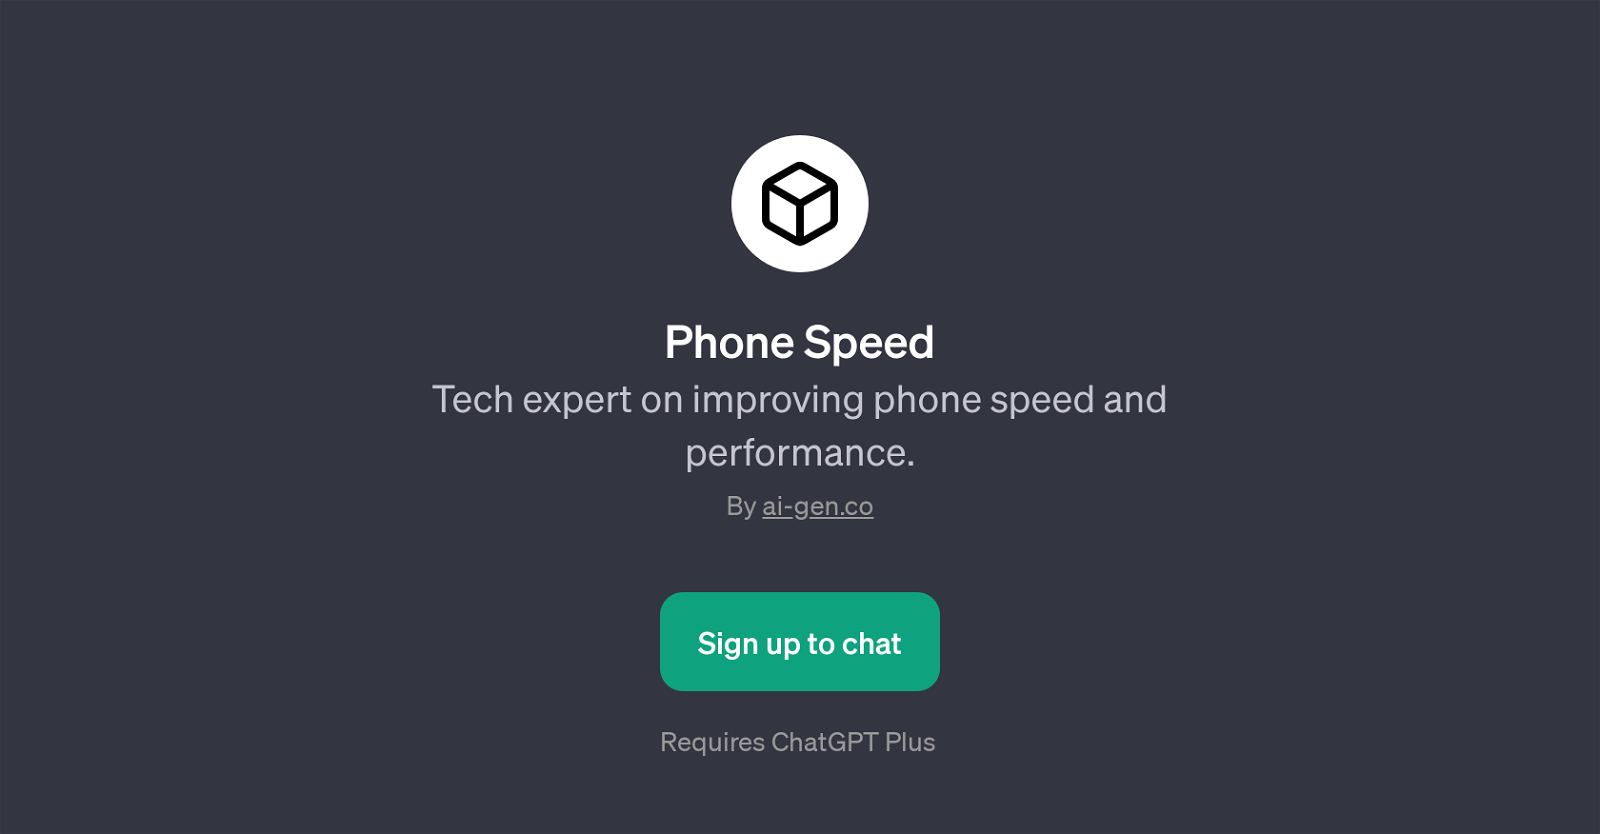 Phone Speed website